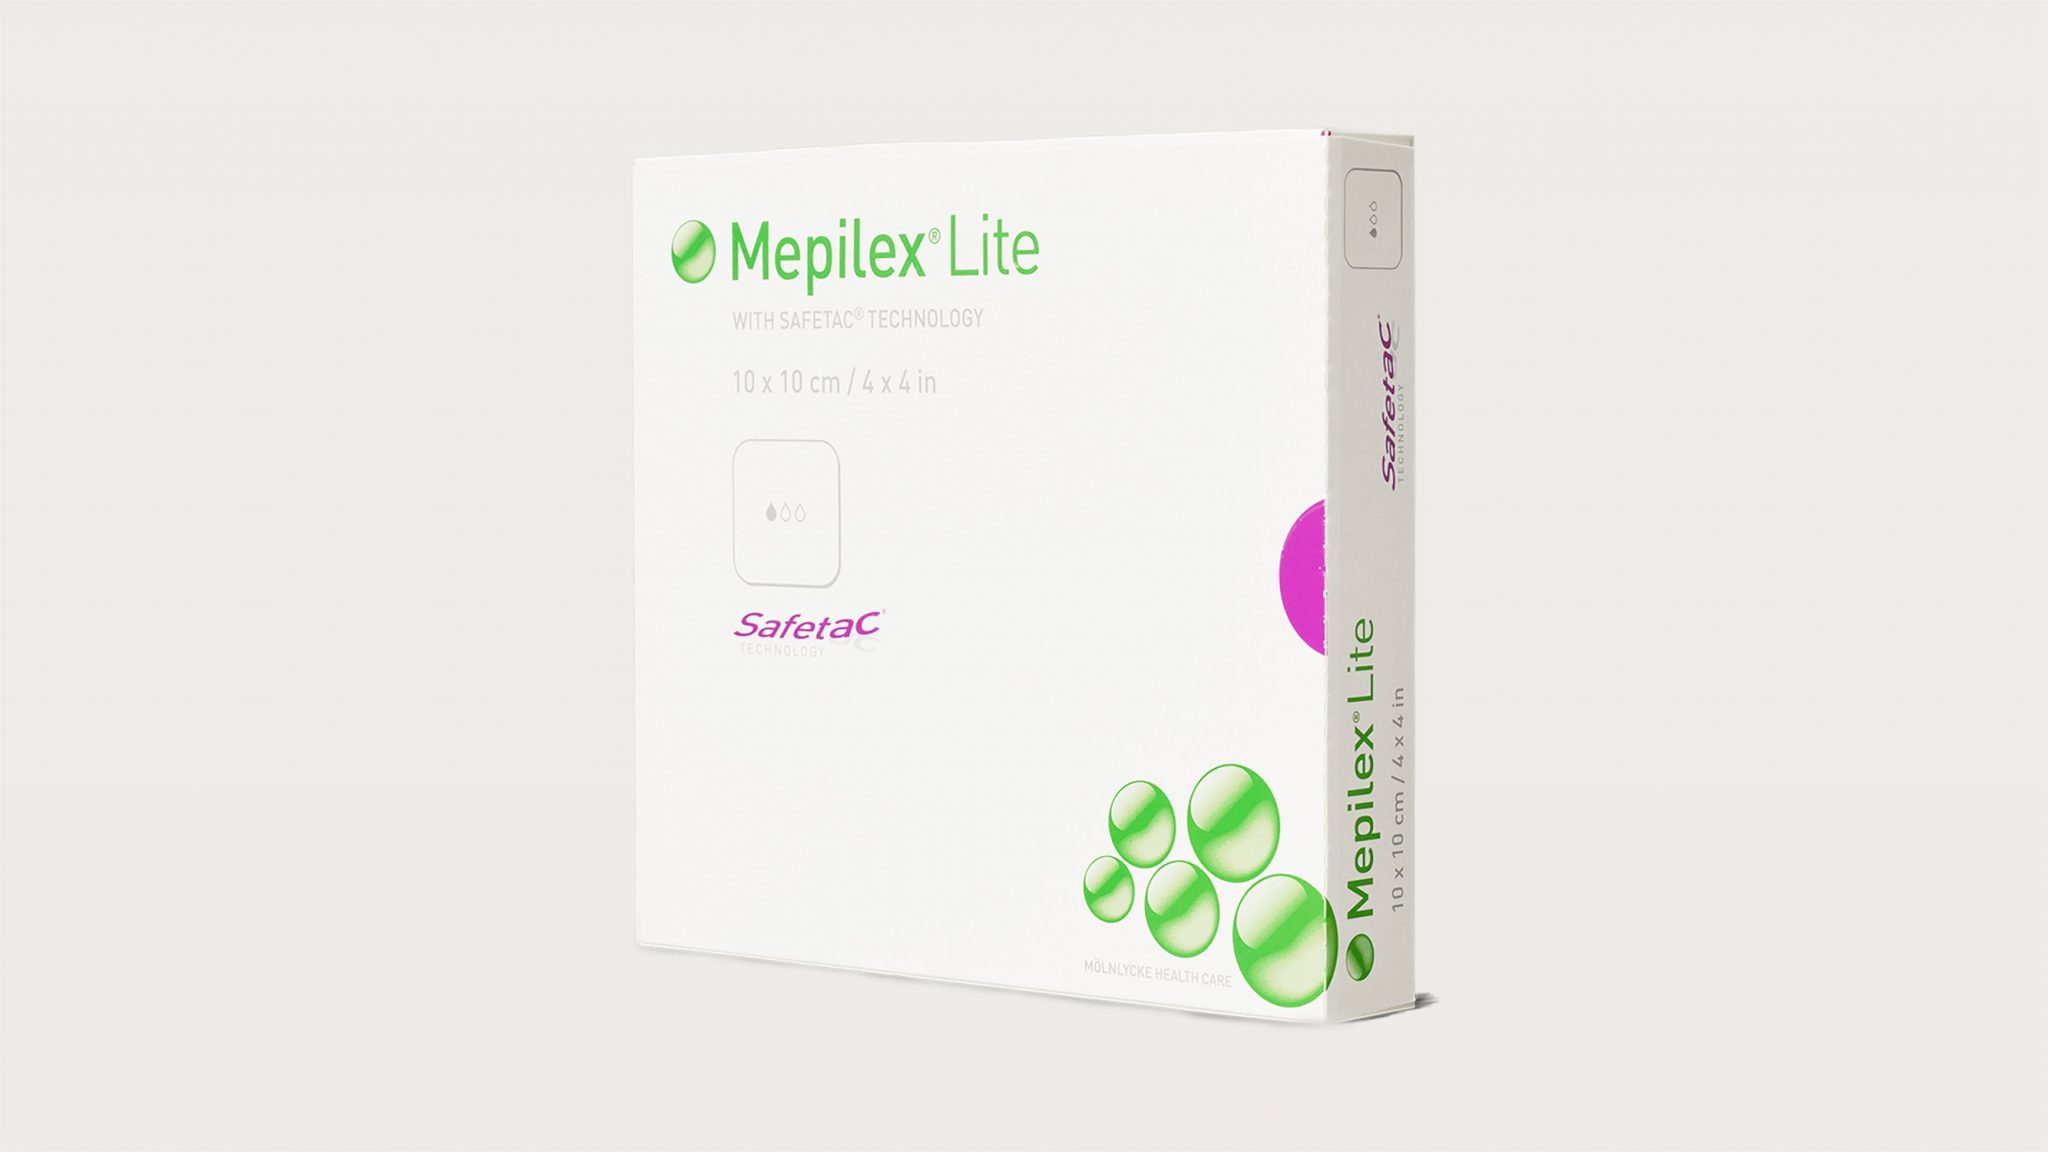 Mepilex Lite image